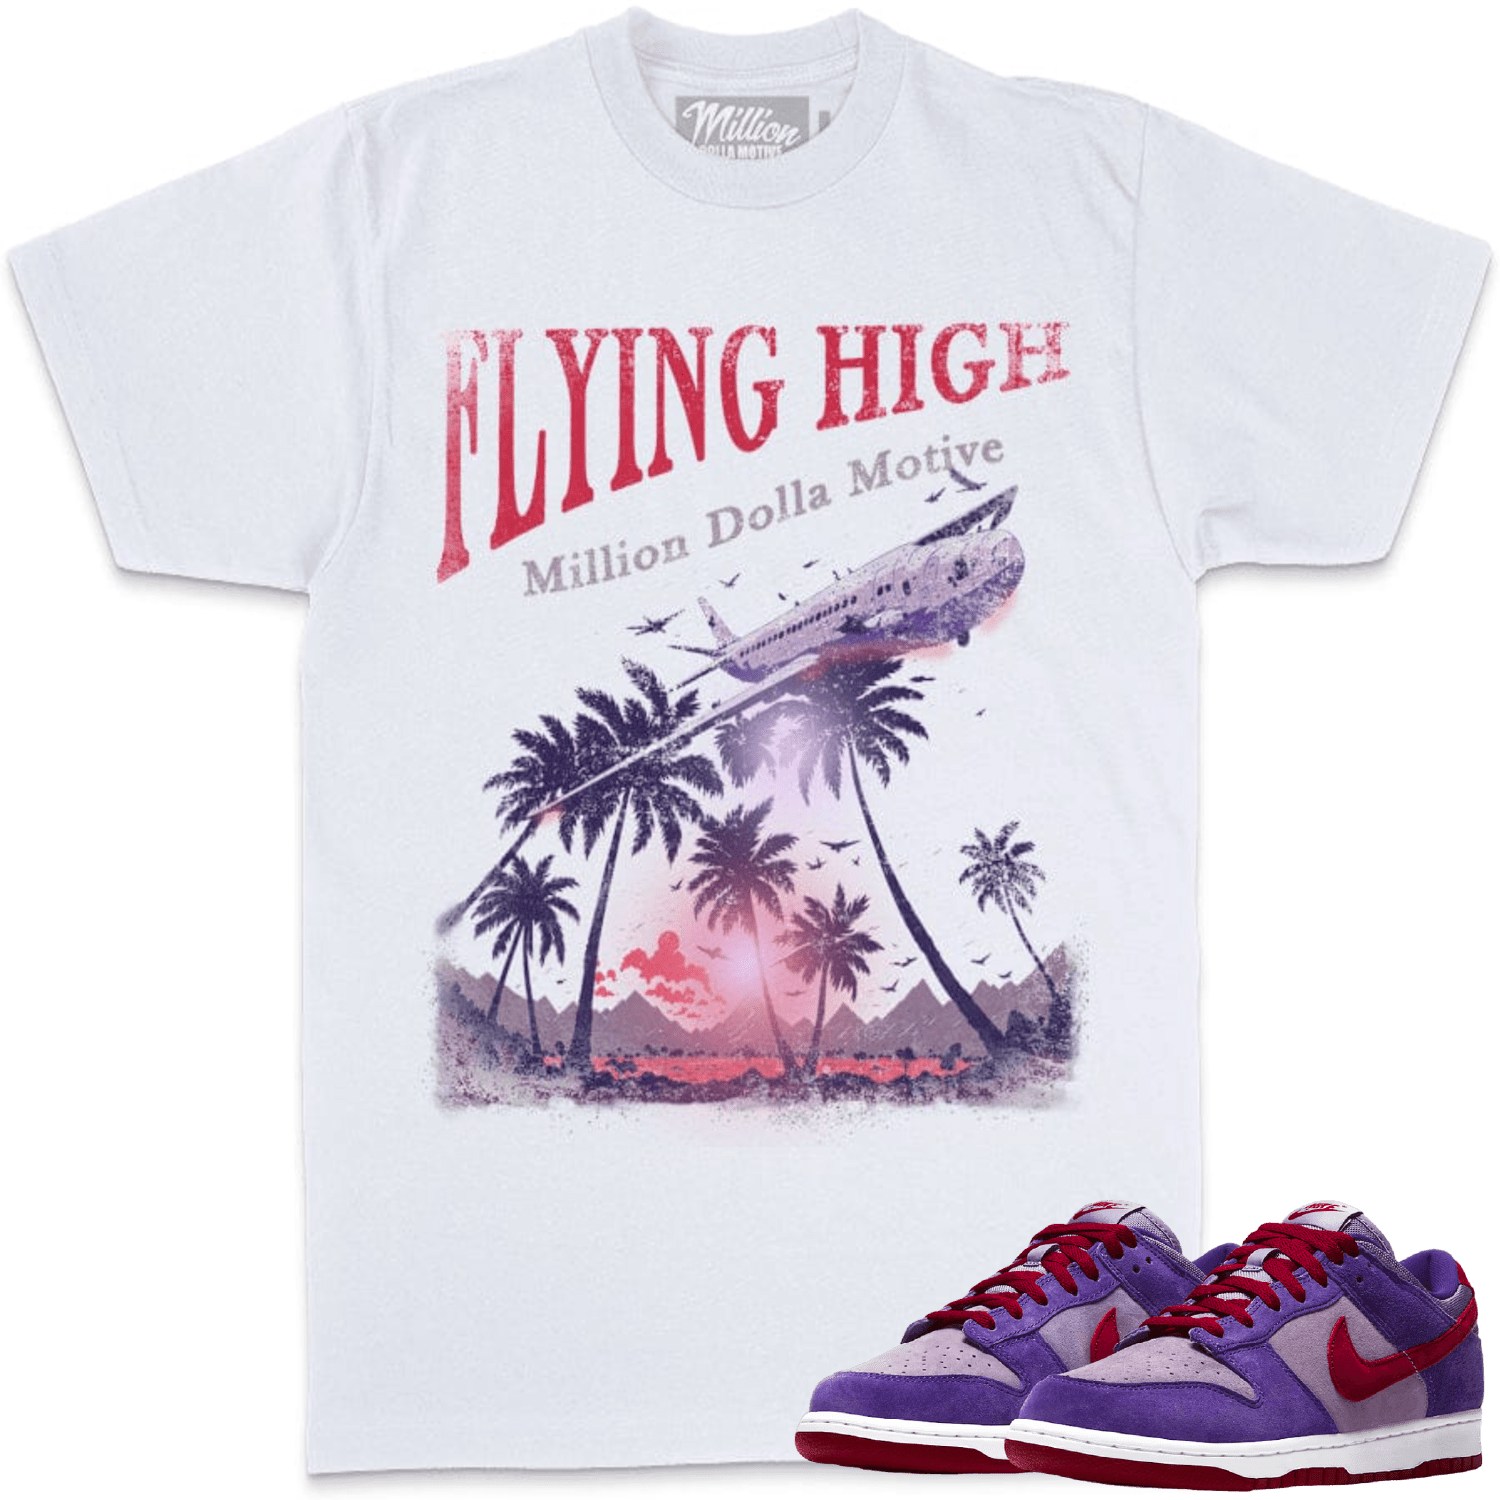 Plum Dunks Shirt - Plum Dunks Sneaker Tees - Flying High